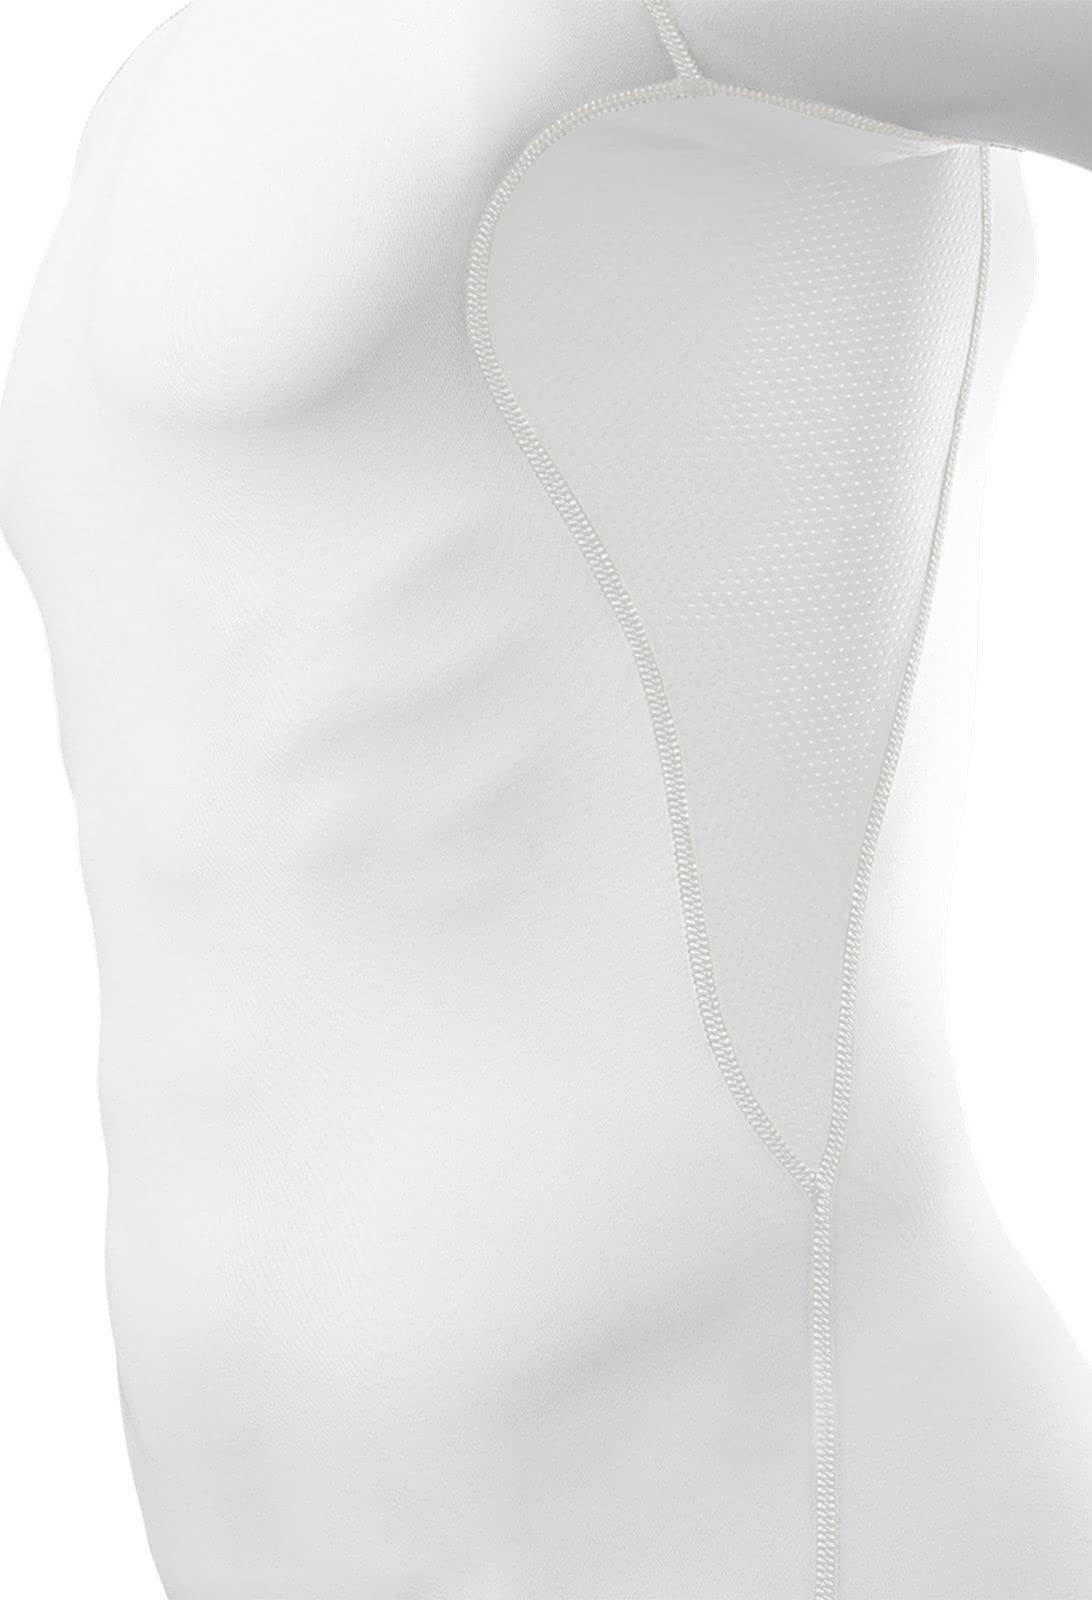 Weiss Herren - elastisch Funktionsunterhemd kurzärmlig, TCA HyperFusion TCA Sportshirt,